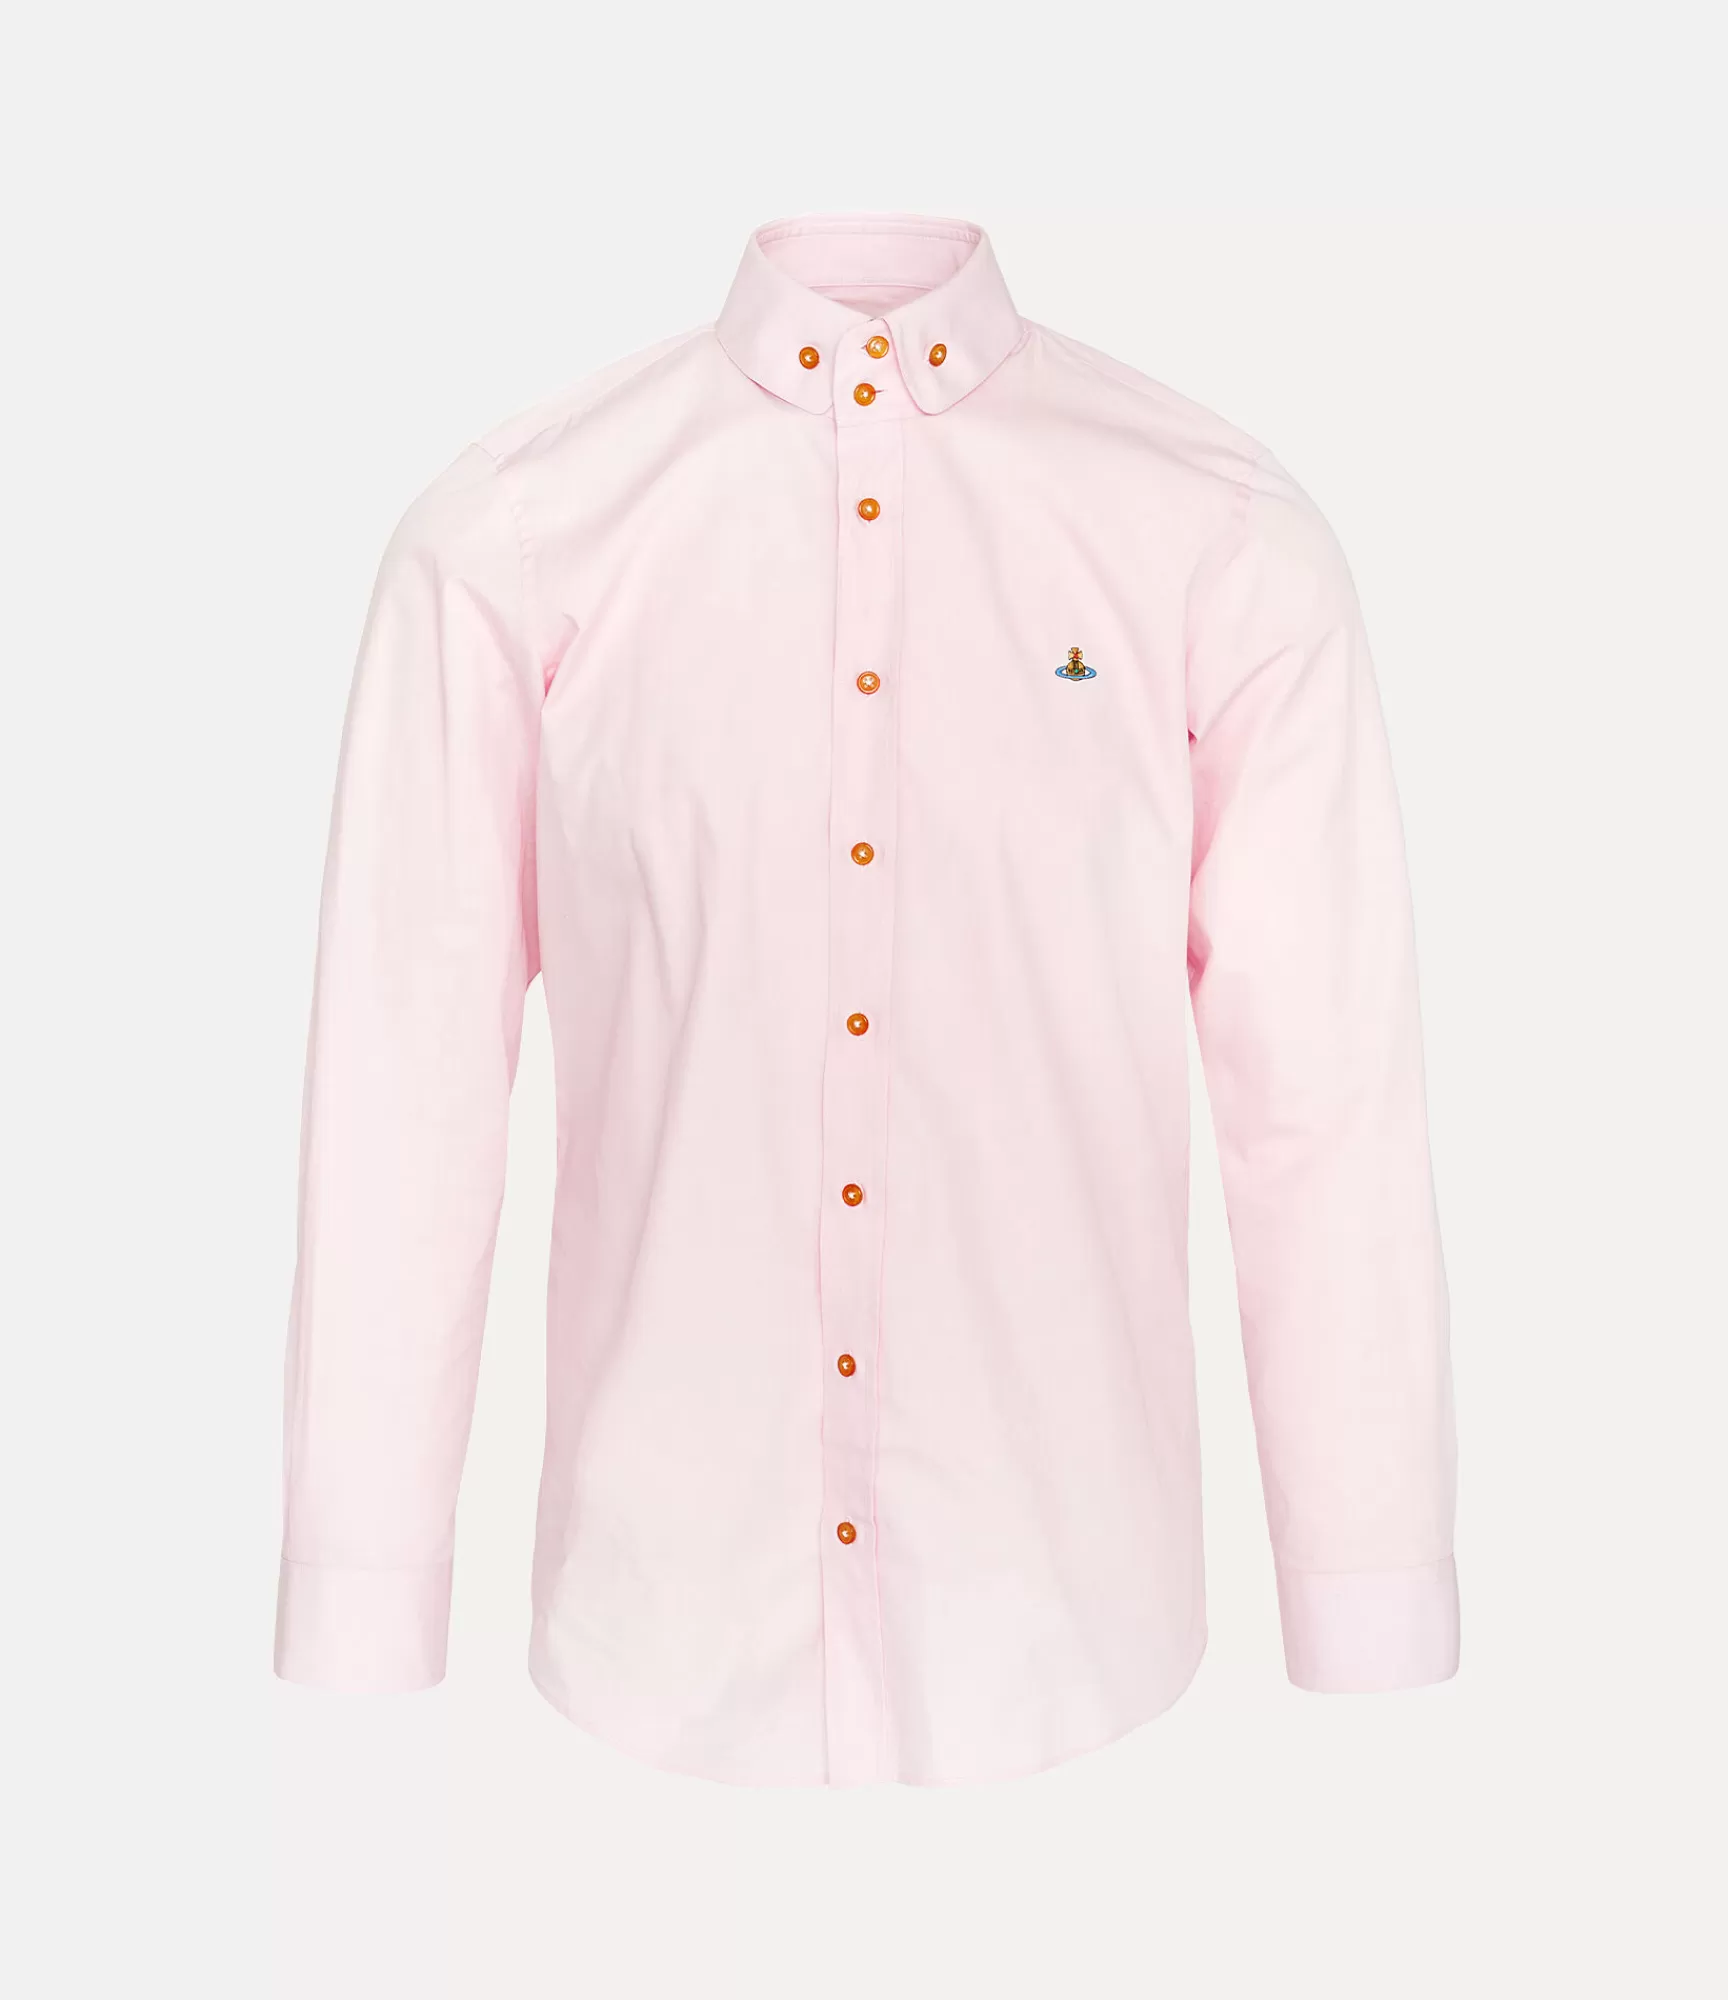 Vivienne Westwood Shirts*2 button krall Pink